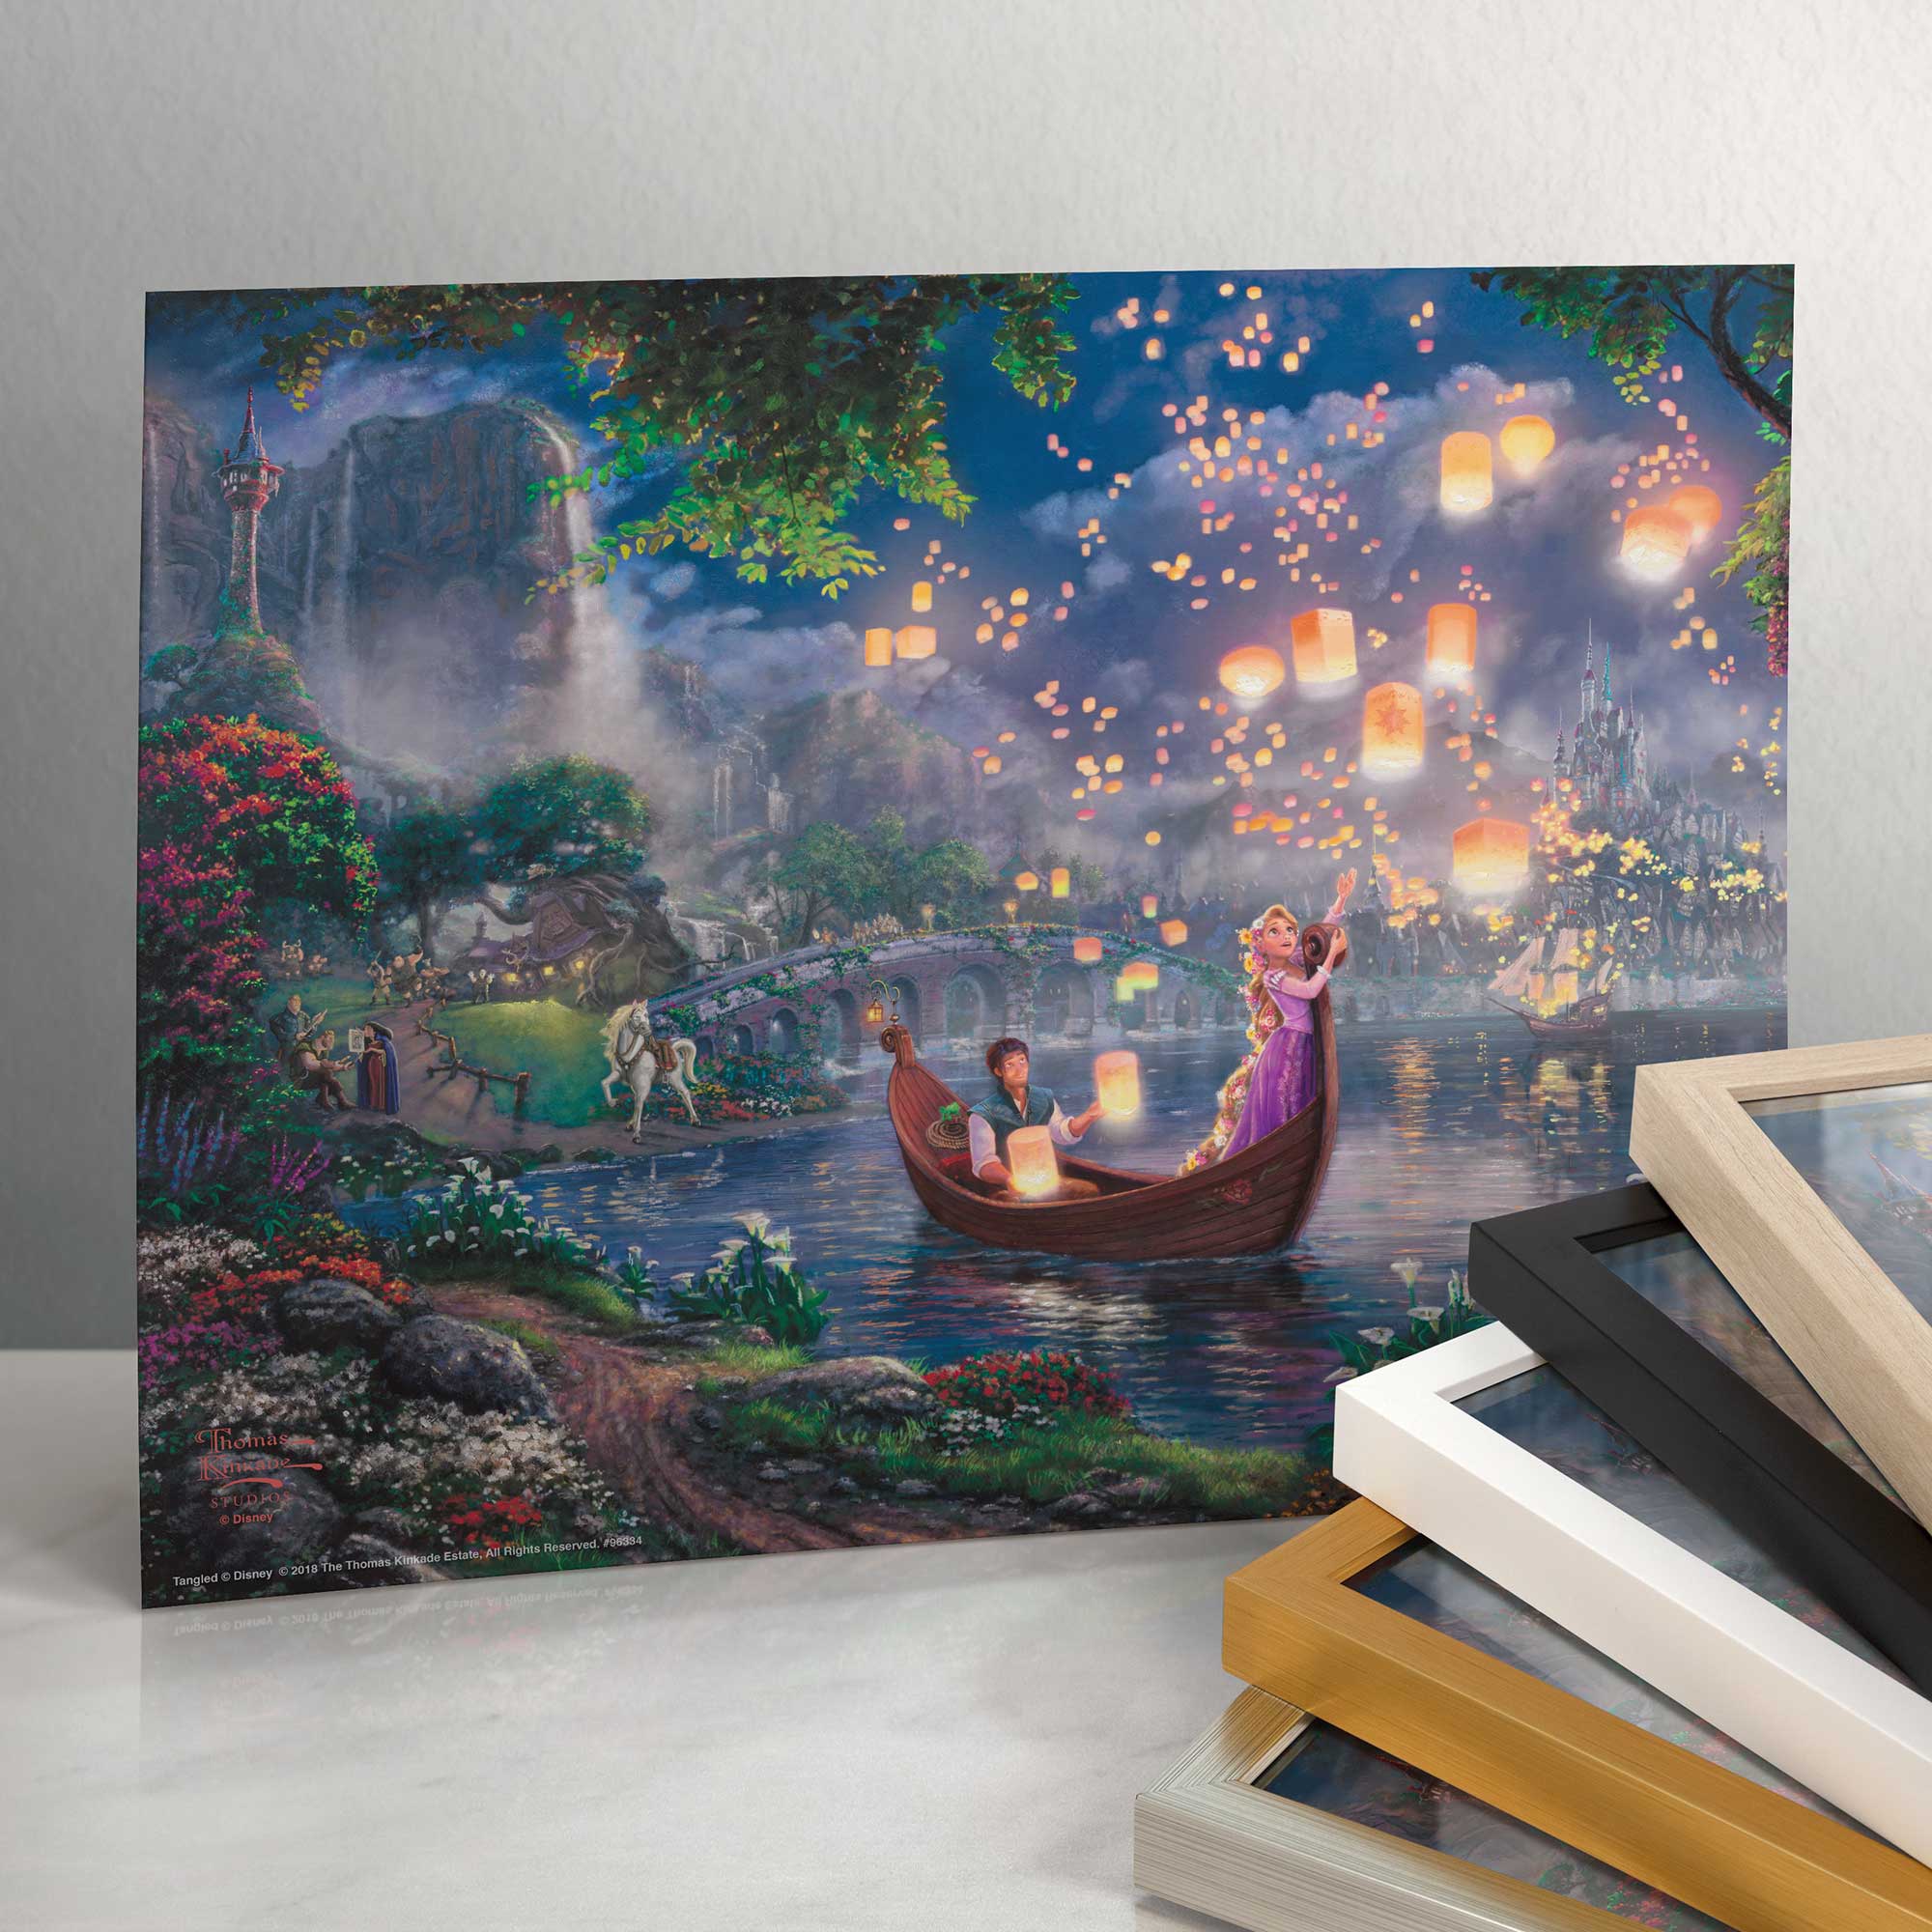 Tangled - Limited Edition Paper By Thomas Kinkade Studios – Disney